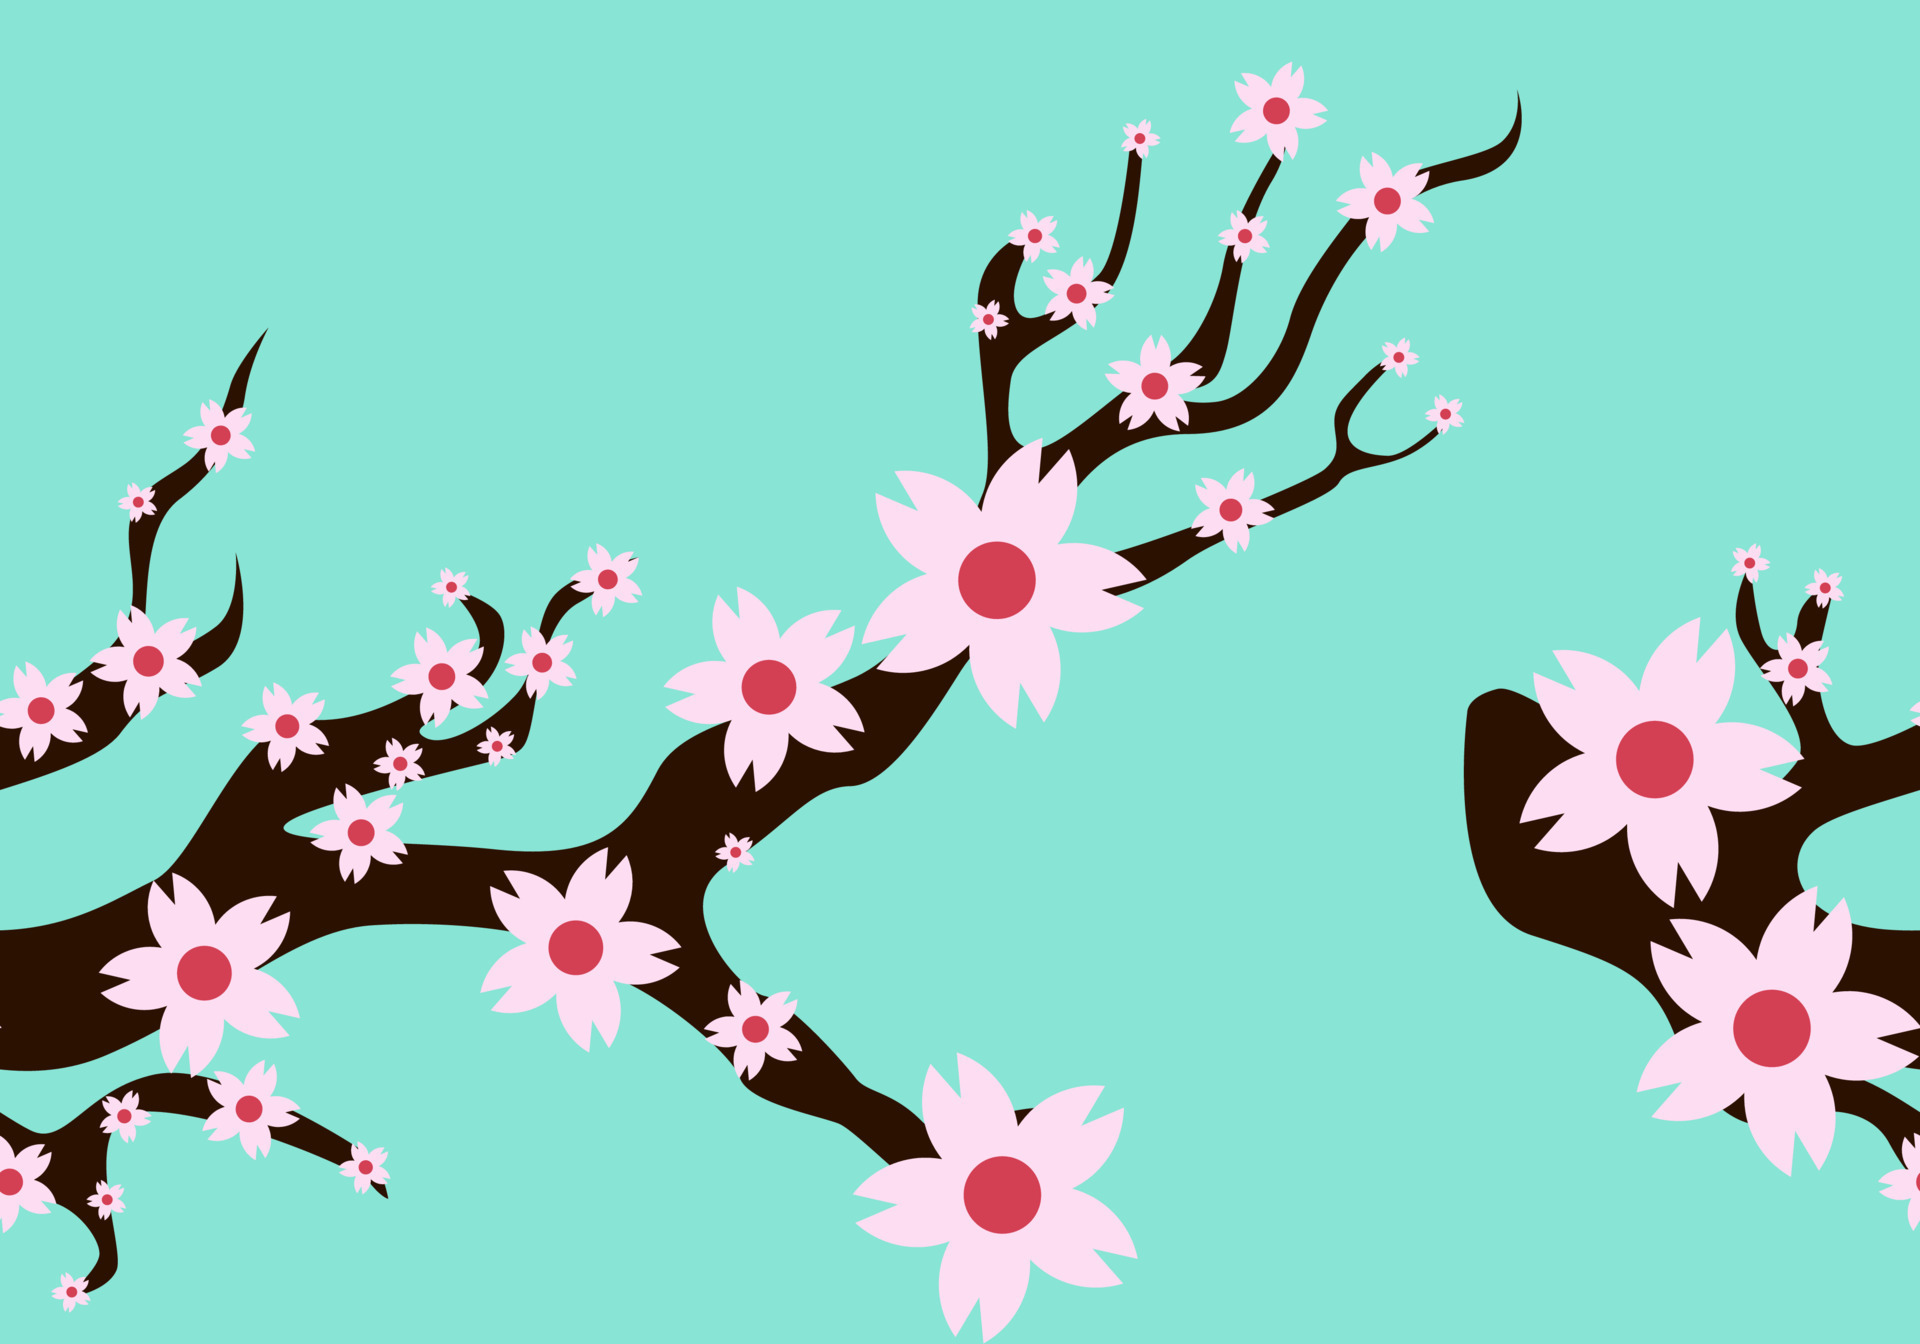 Cherry blossoms, spring flower garden vector illustration on tosca  background, Japanese sakura flowers aesthetic and vaporwave style. 7809814  Vector Art at Vecteezy